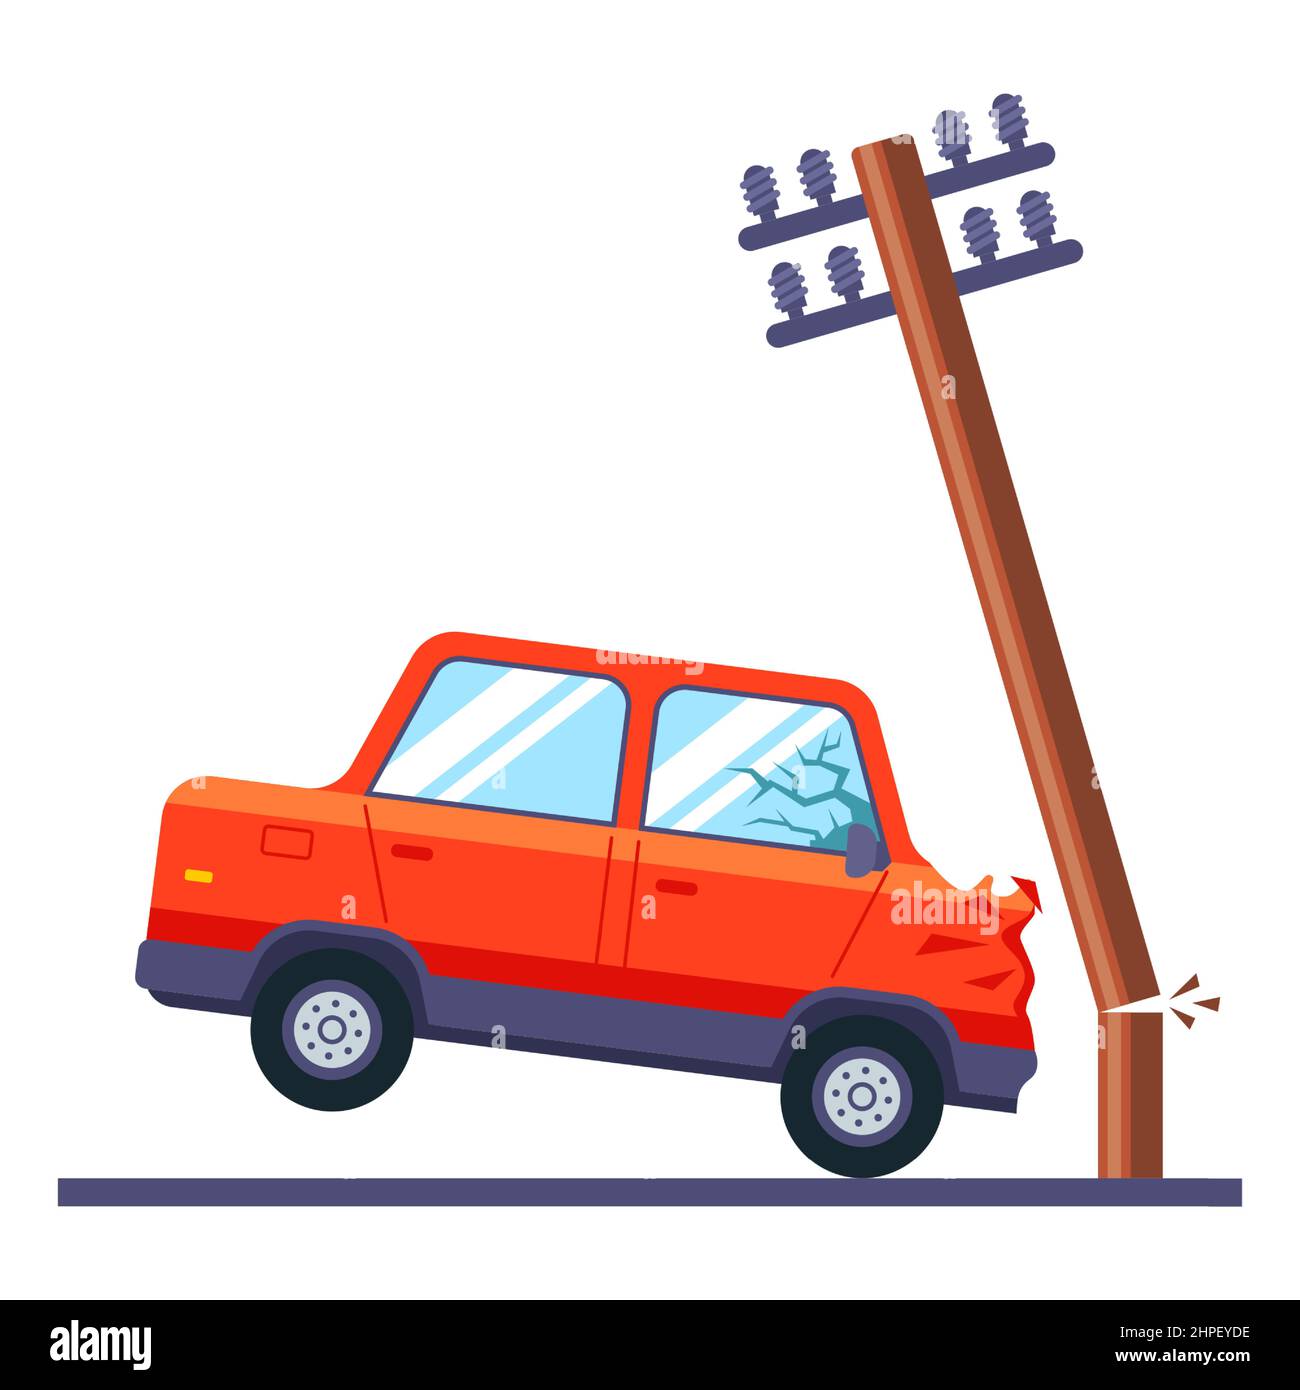 Crashed car Stock-Vektorgrafiken kaufen - Seite 2 - Alamy